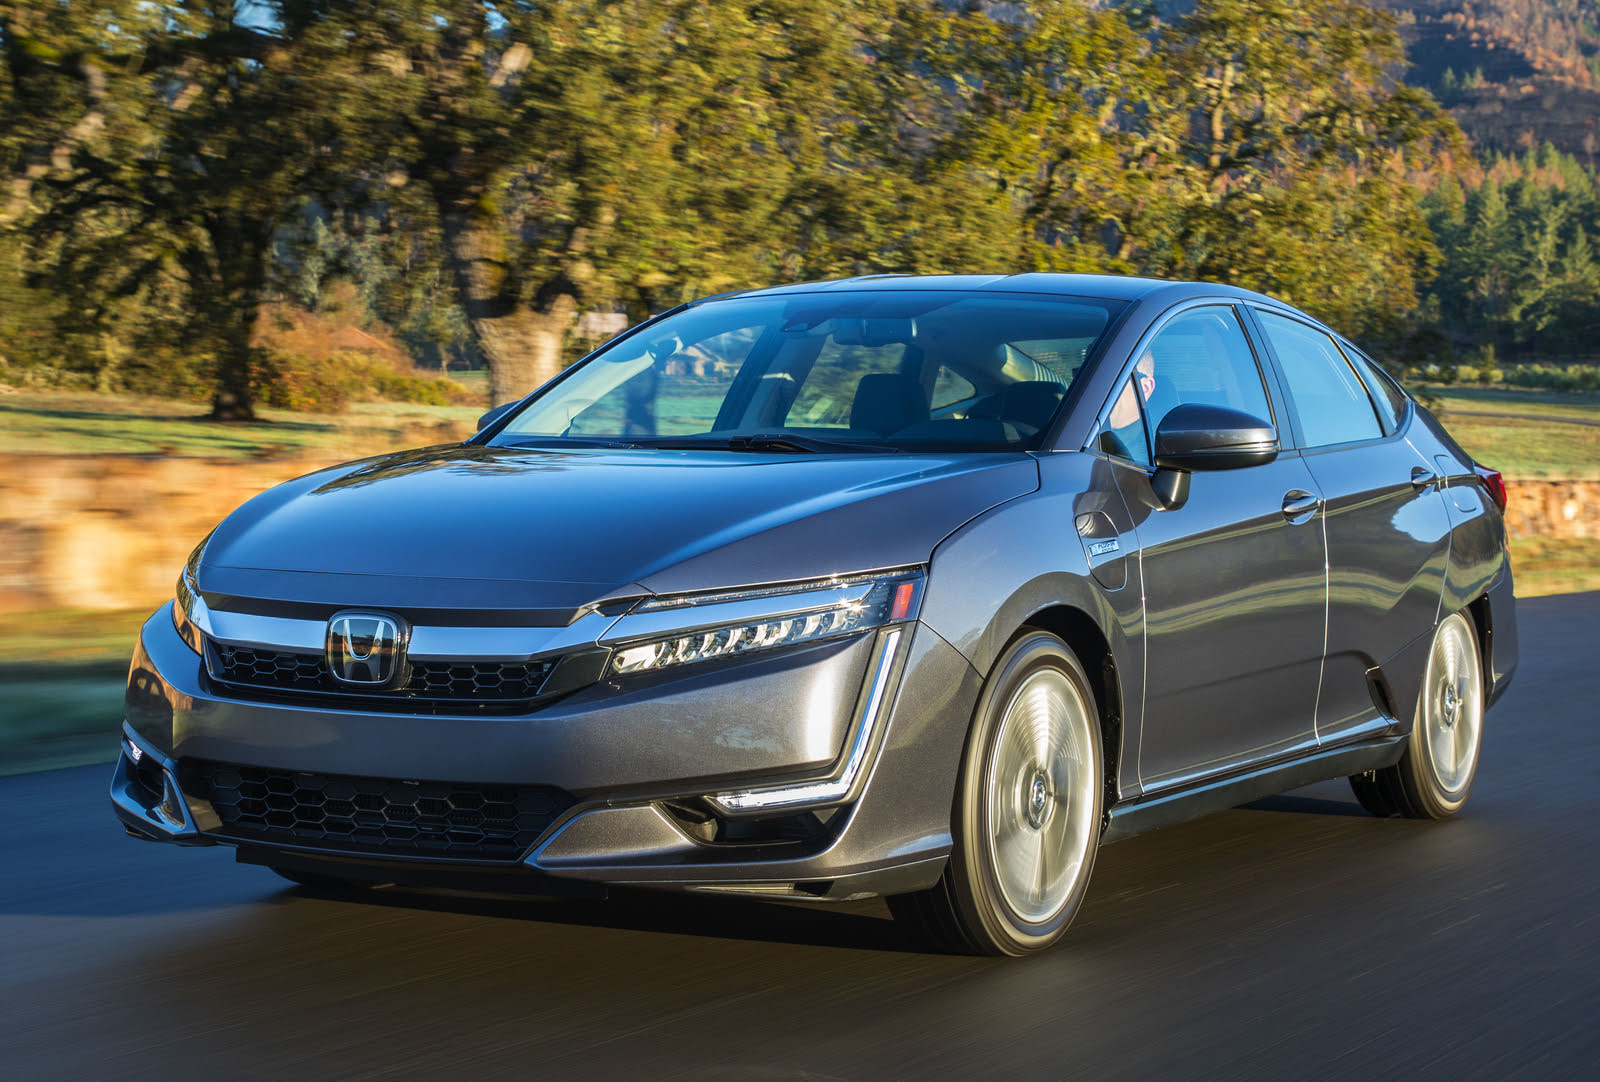 Honda Clarity Hybrid PlugIn Test Drive Review CarGurus